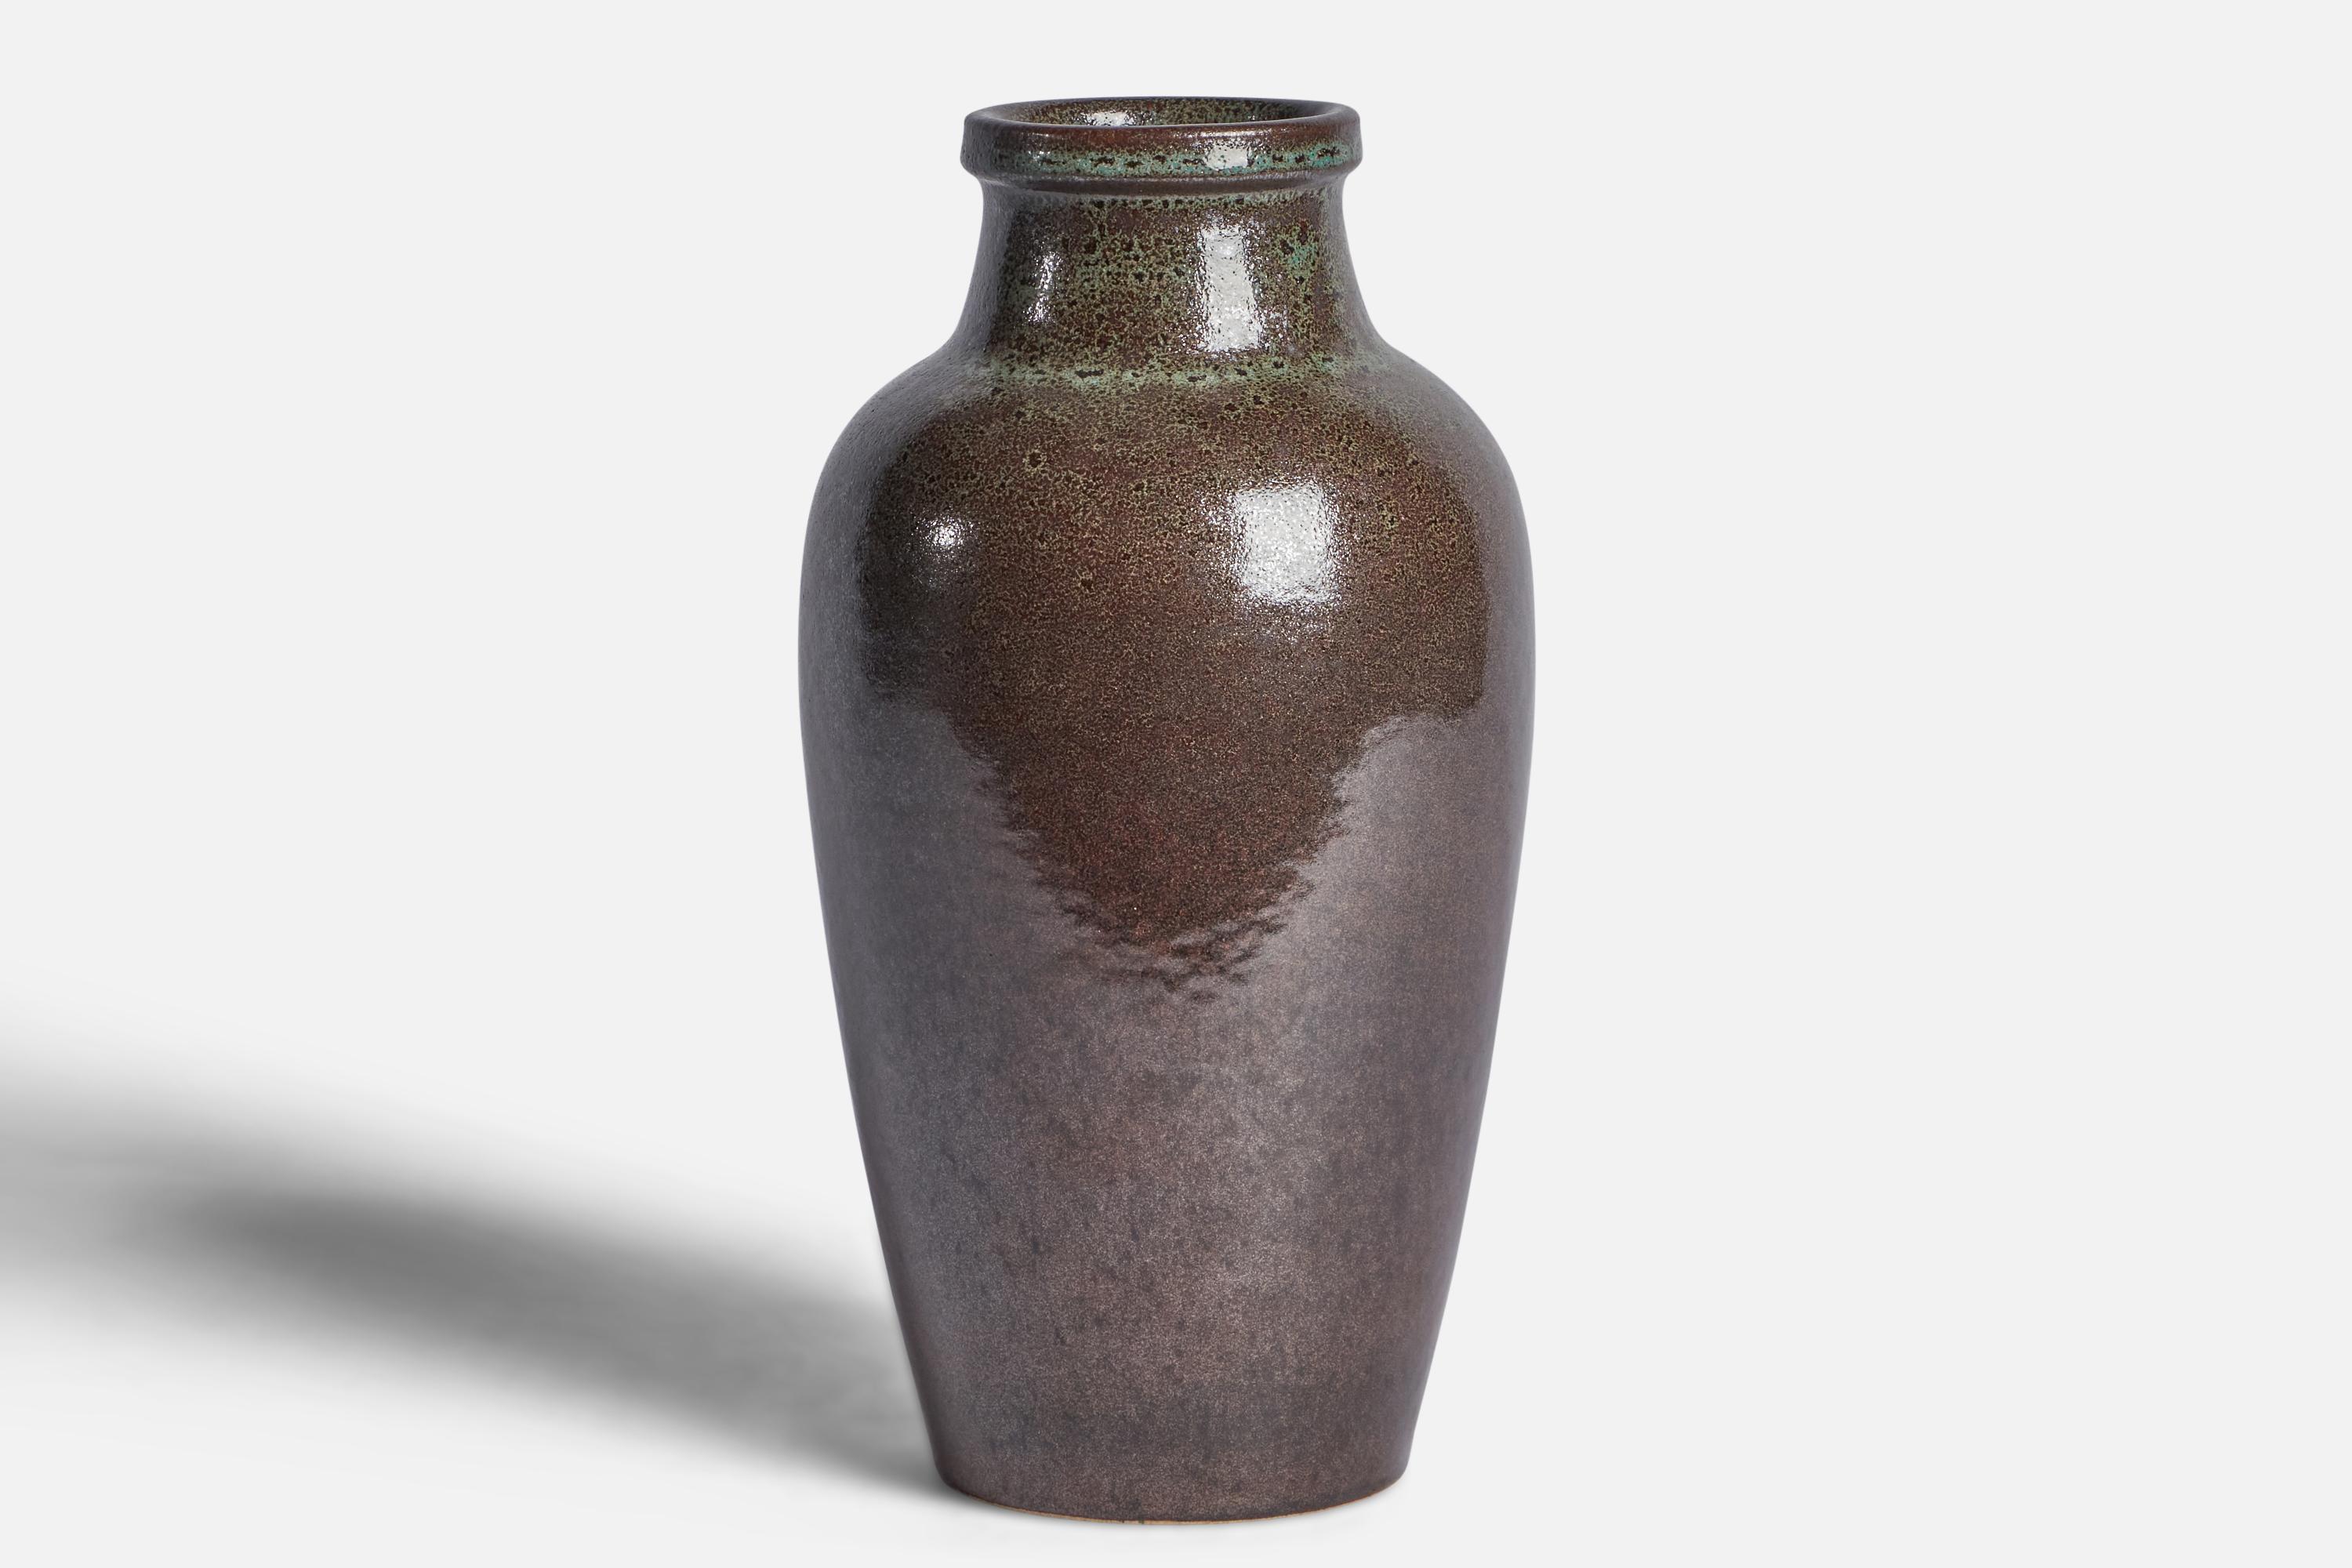 A grey brown-glazed stoneware vase designed and produced by Yngve Blixt, Höganäs, Sweden, c. 1960s.